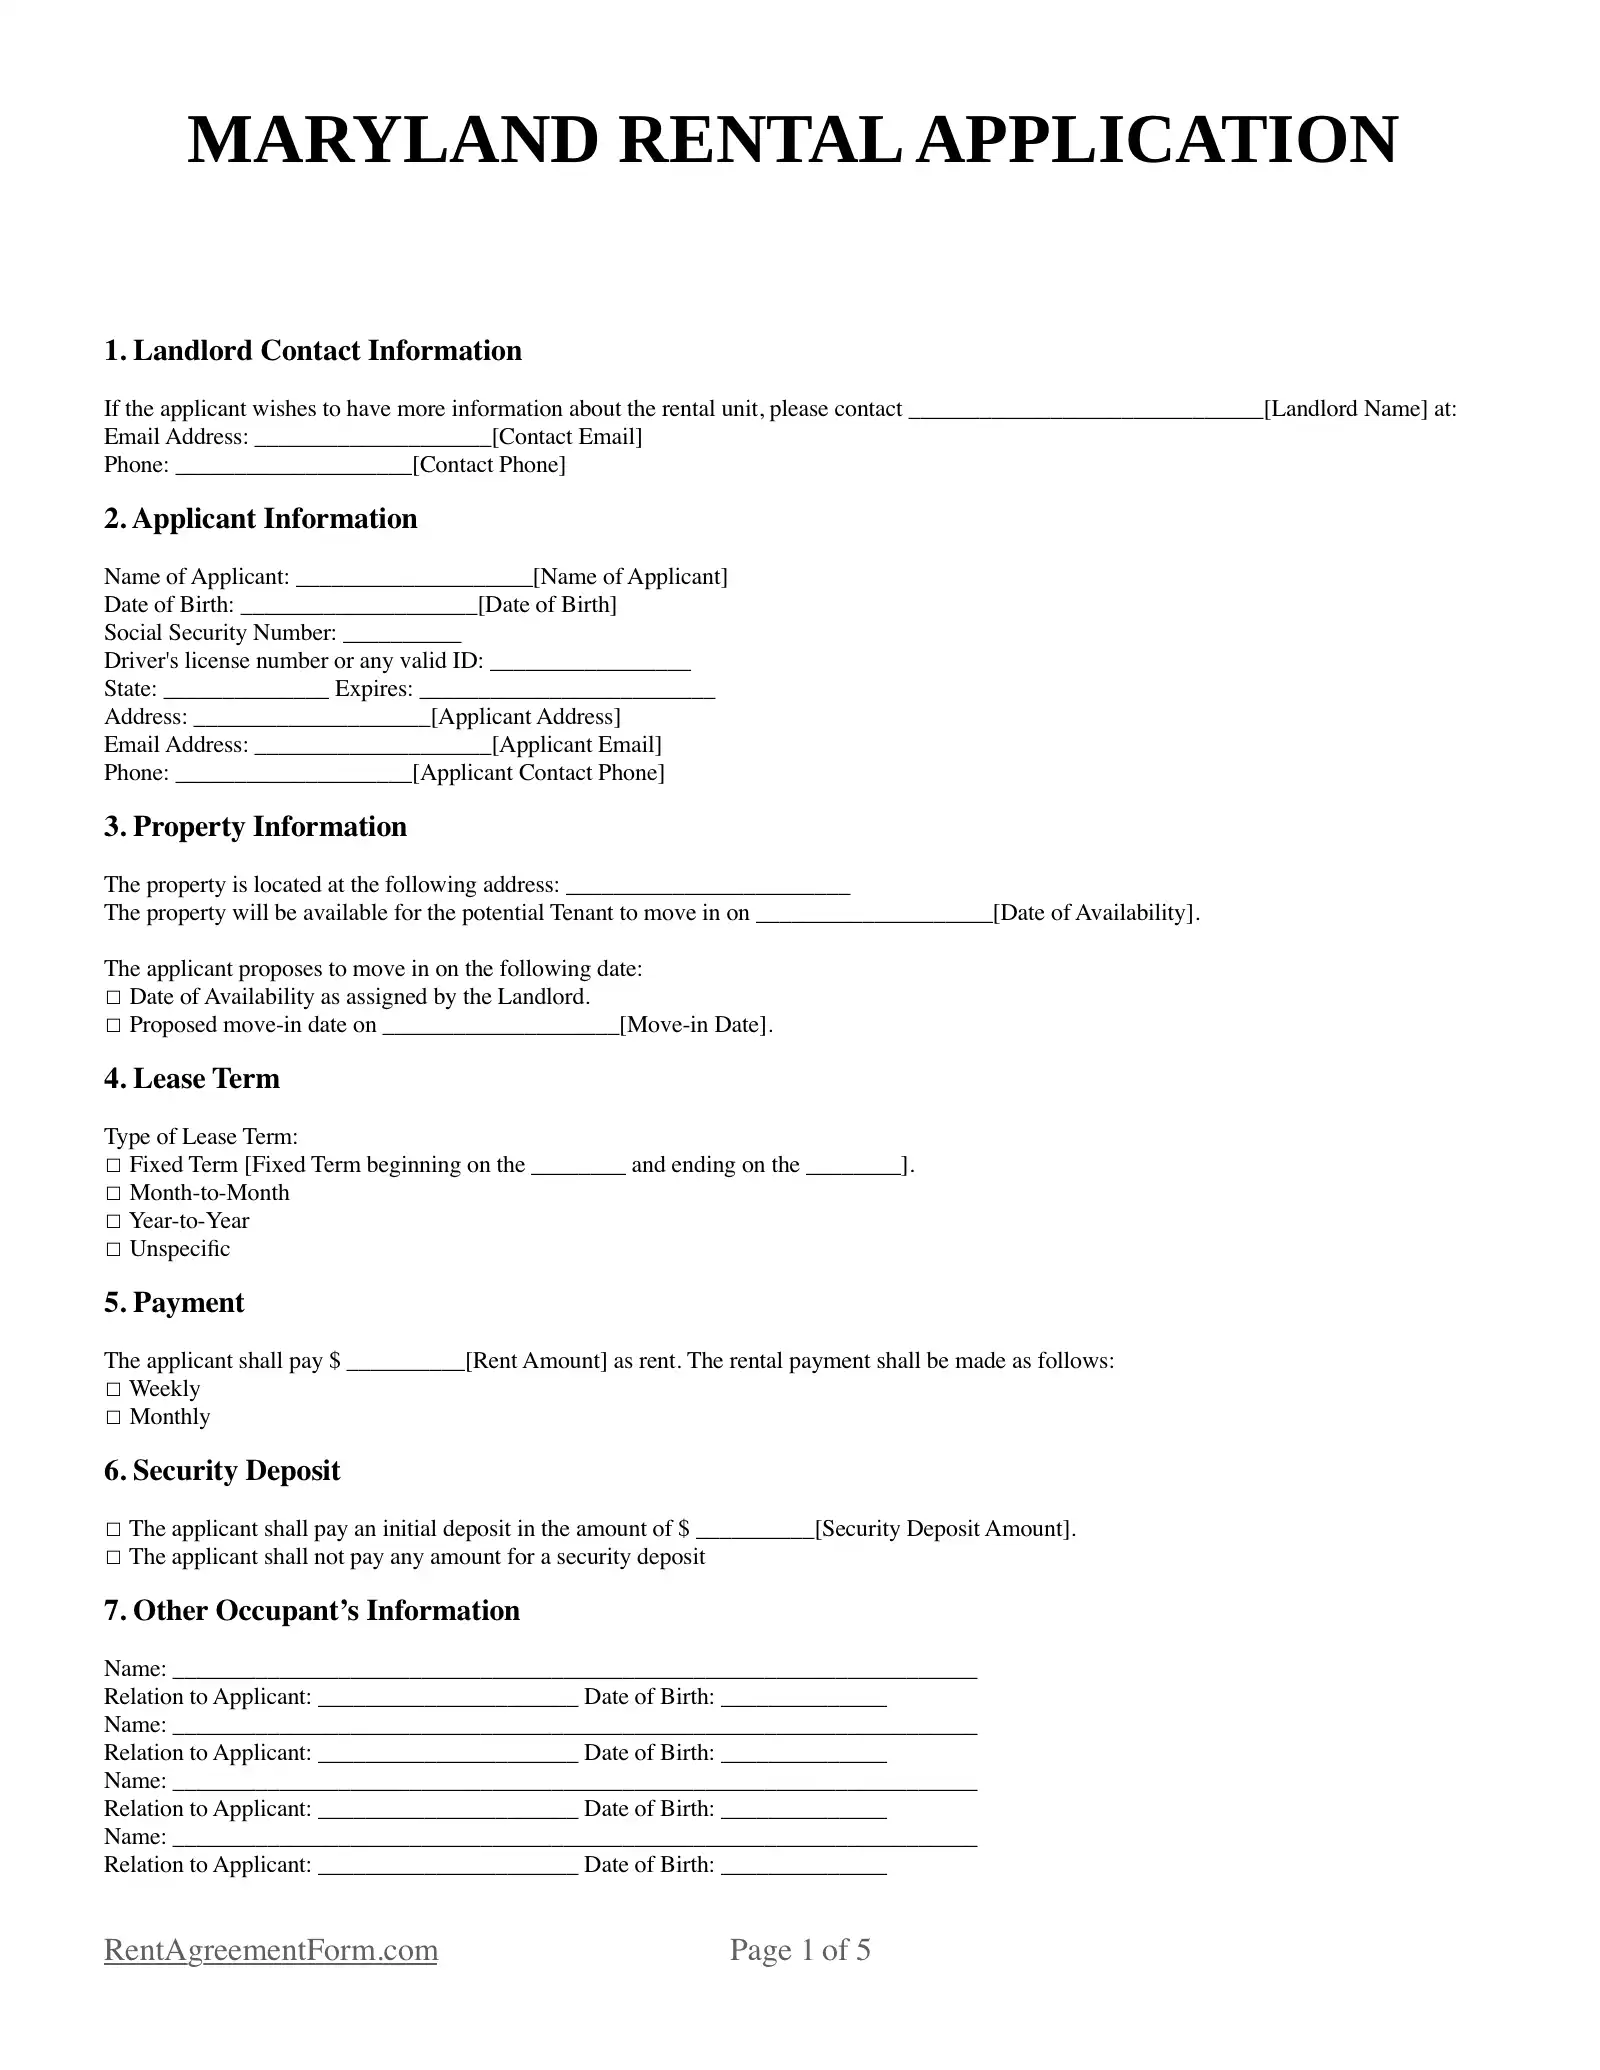 Maryland Rental Application Sample